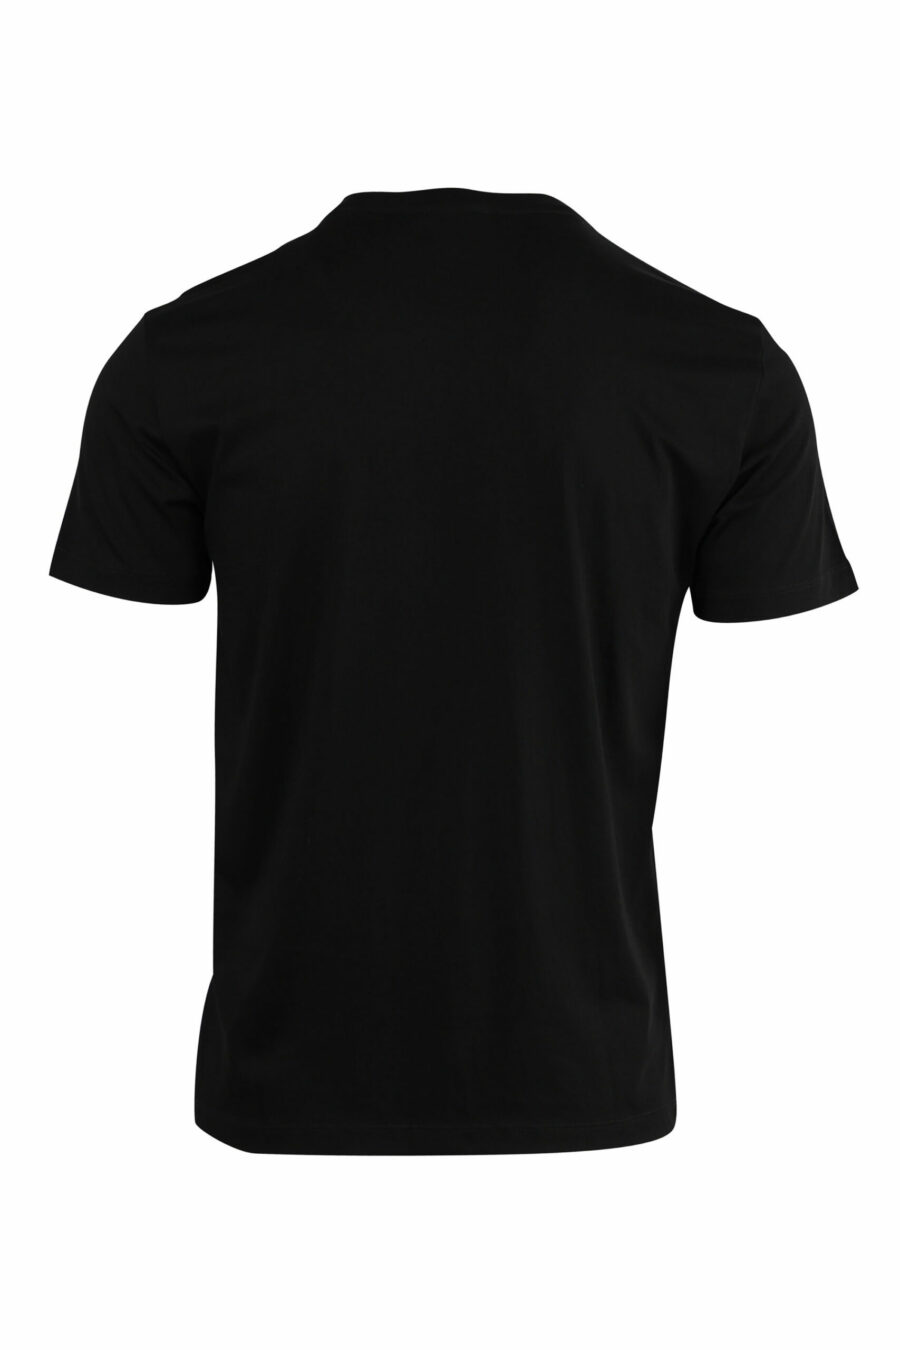 Schwarzes T-Shirt mit goldenem Mini-Logo-Etikett "lux identity" - 8057767515805 2 skaliert